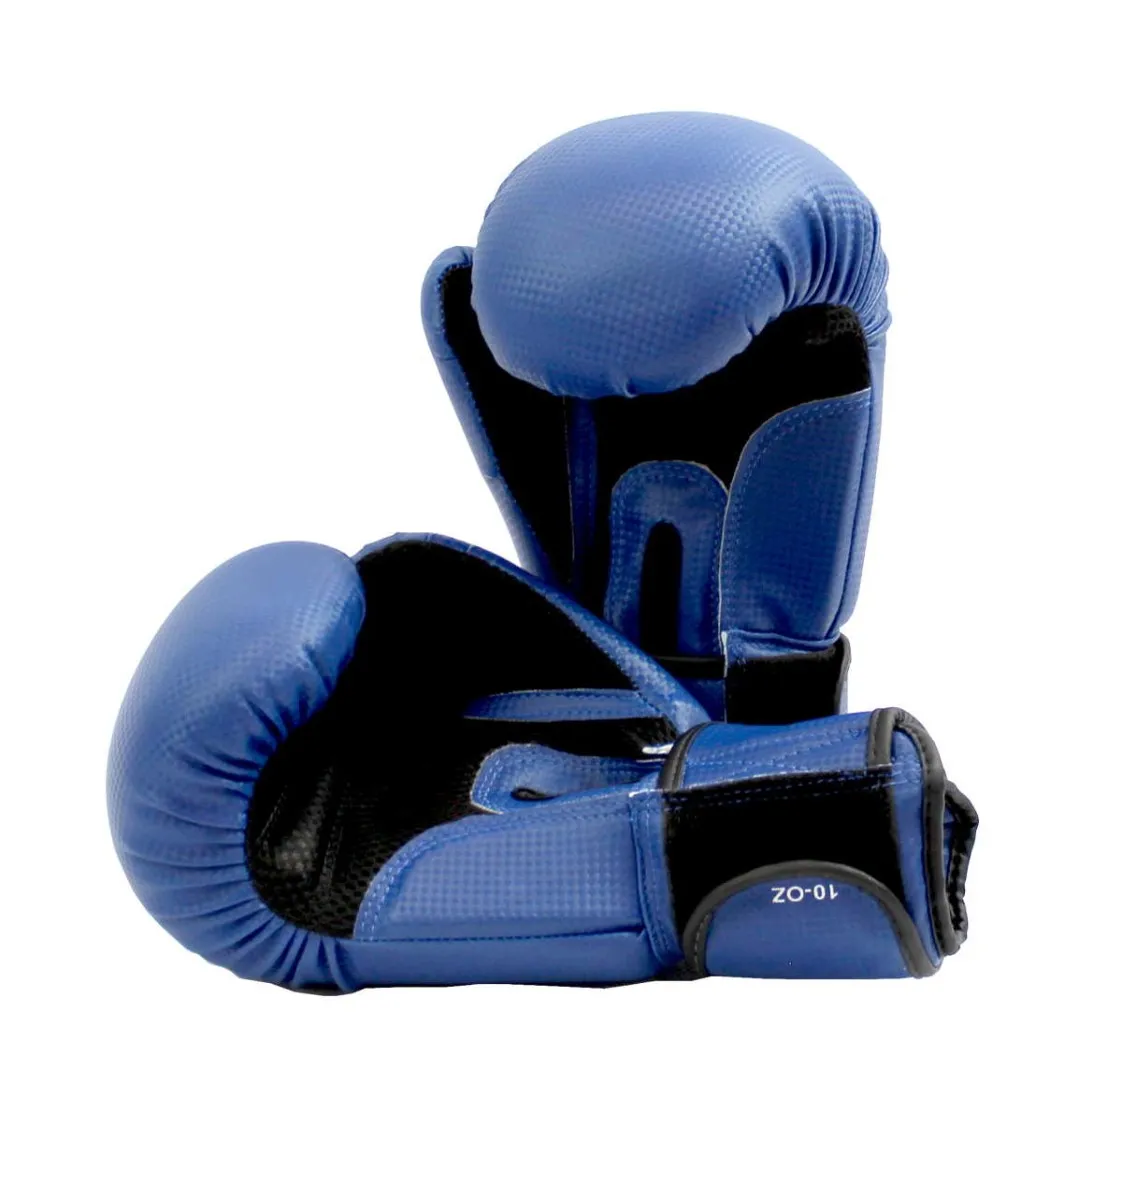 Boxing gloves carbon blue